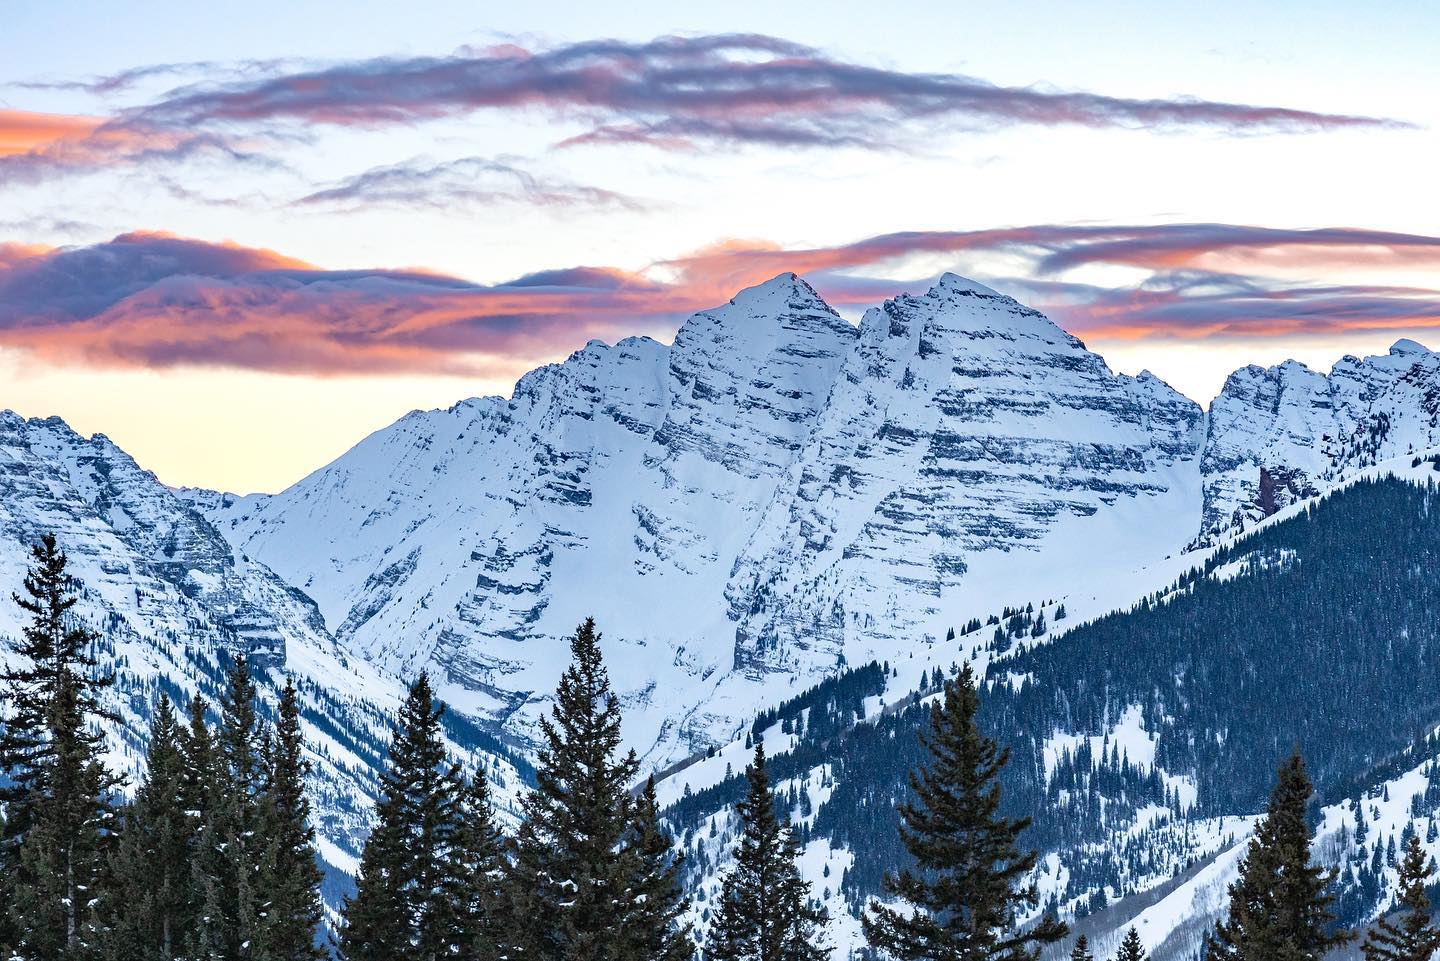 Aspen Snowmass Colorado USA